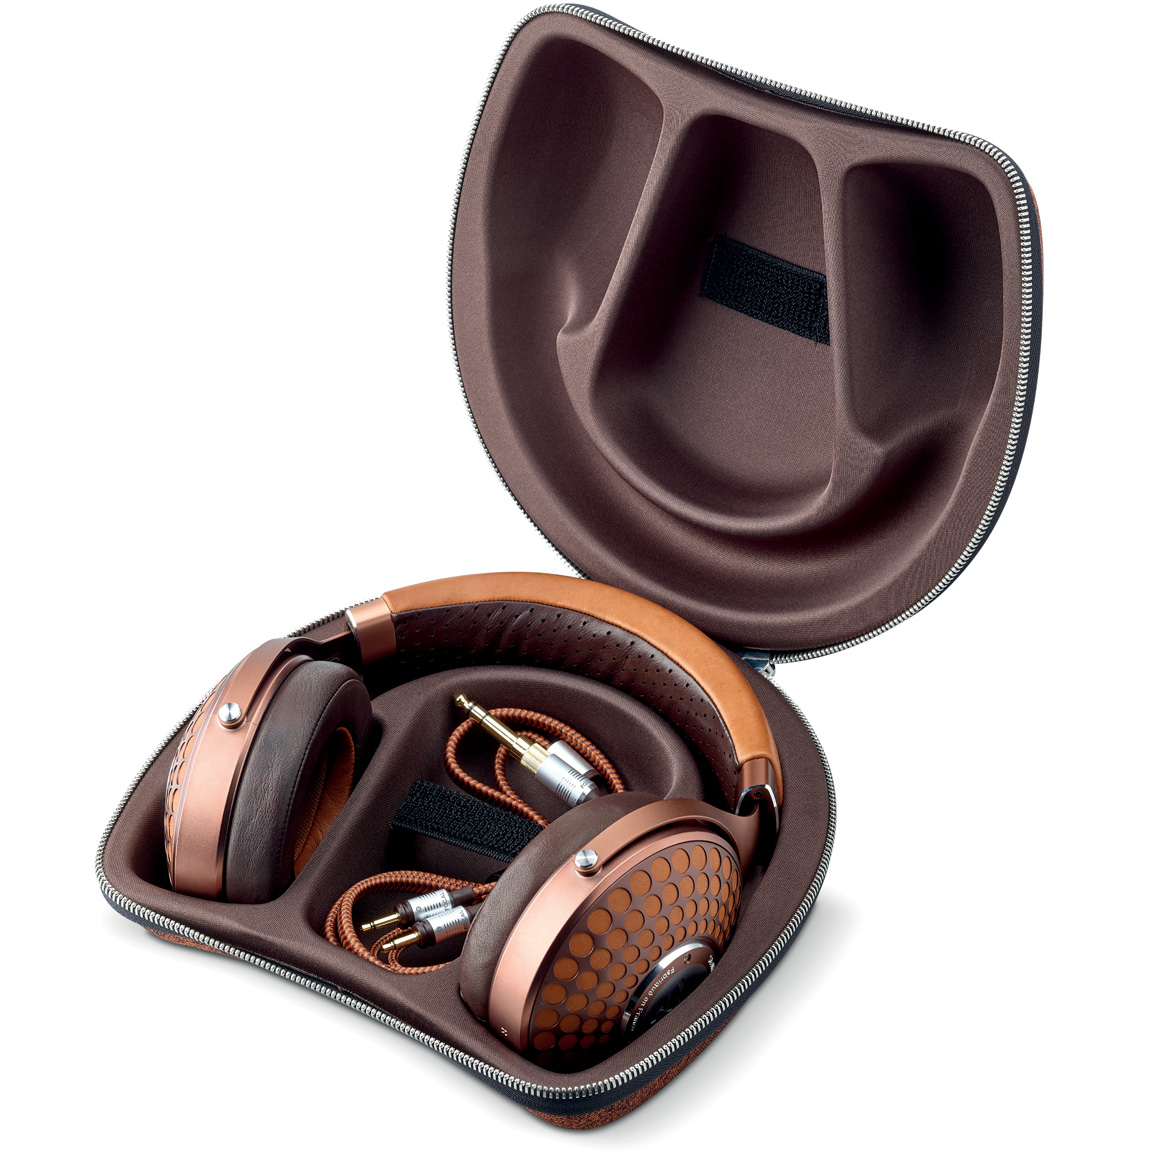 Stellia headphones - Carrying case